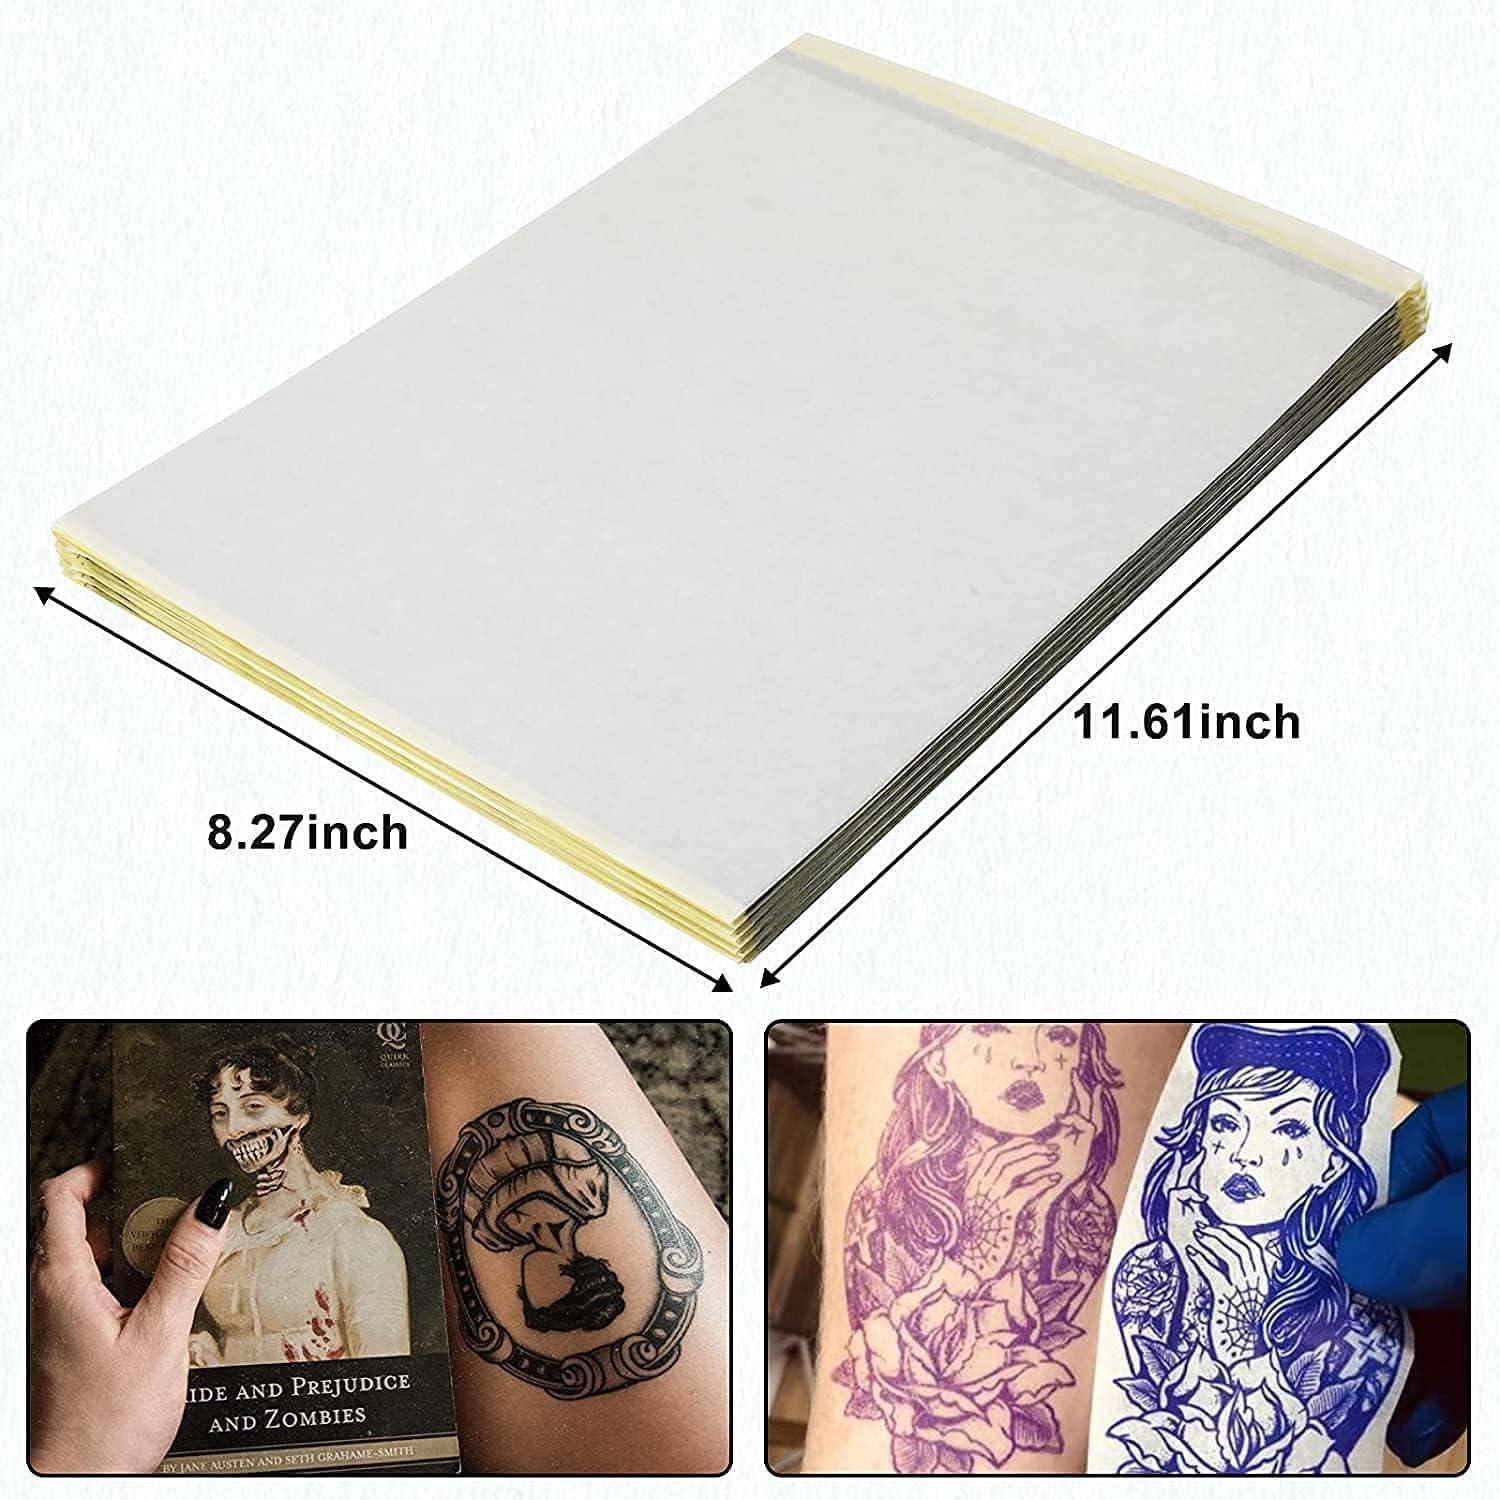 Tattoo Transfer Paper Stencil Paper for Tattooing A4 Tattoo Stencil Paper  with 4 Layers for Tattoo